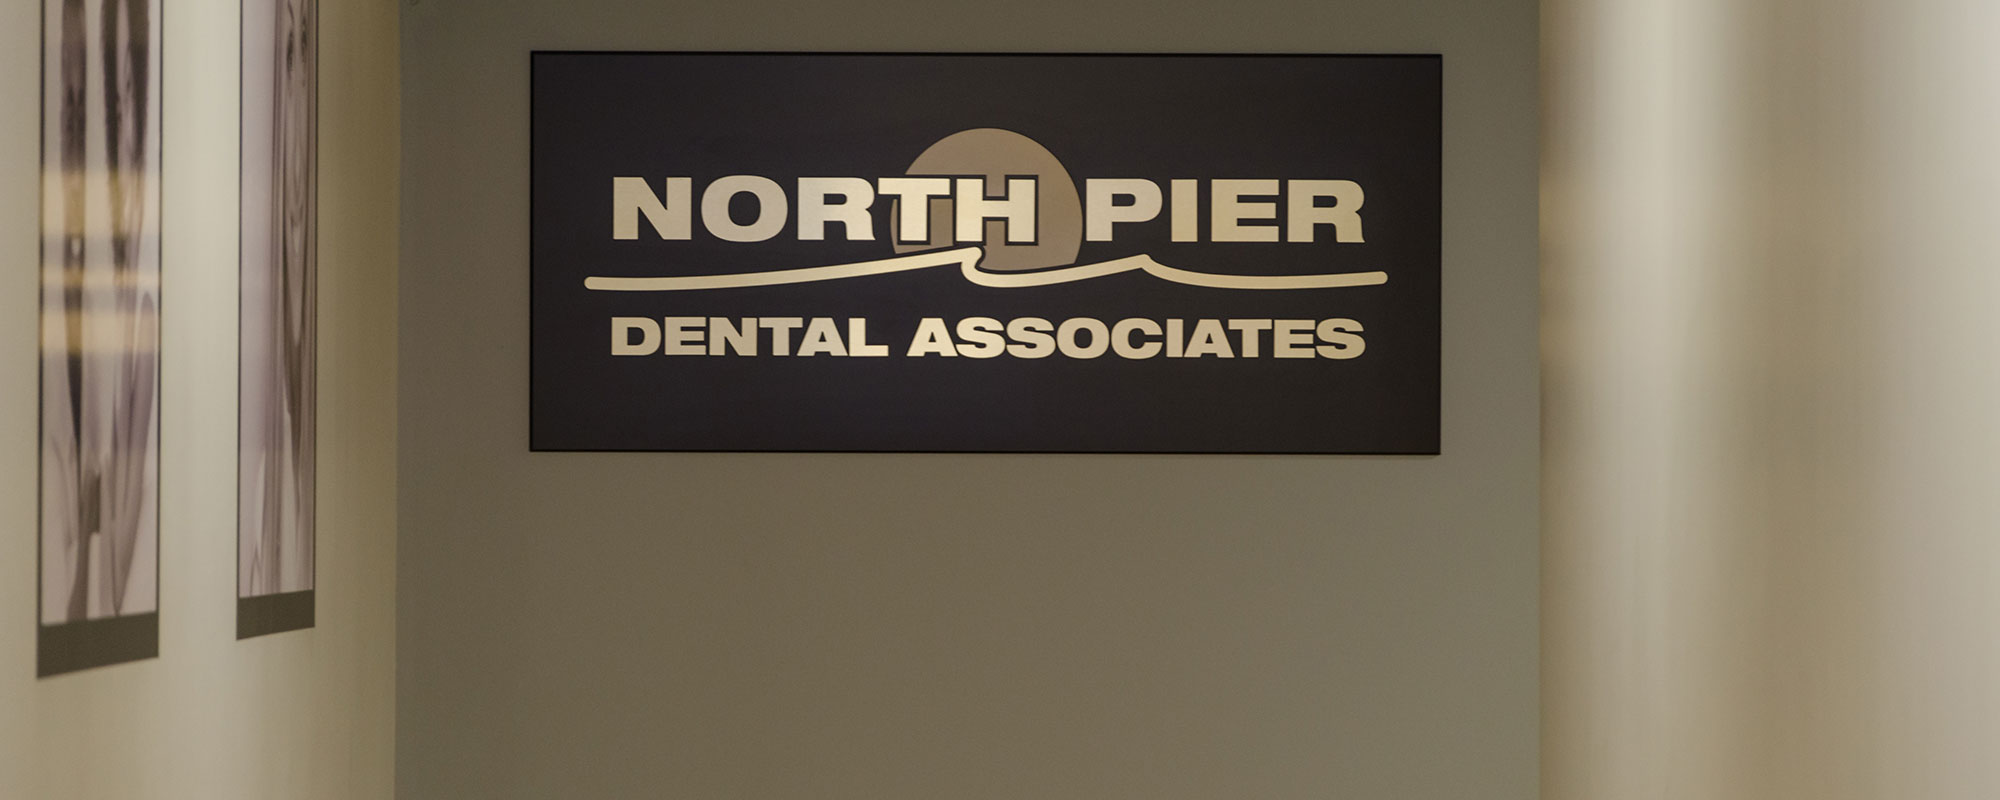 Meet the North Pier Dental Associates team